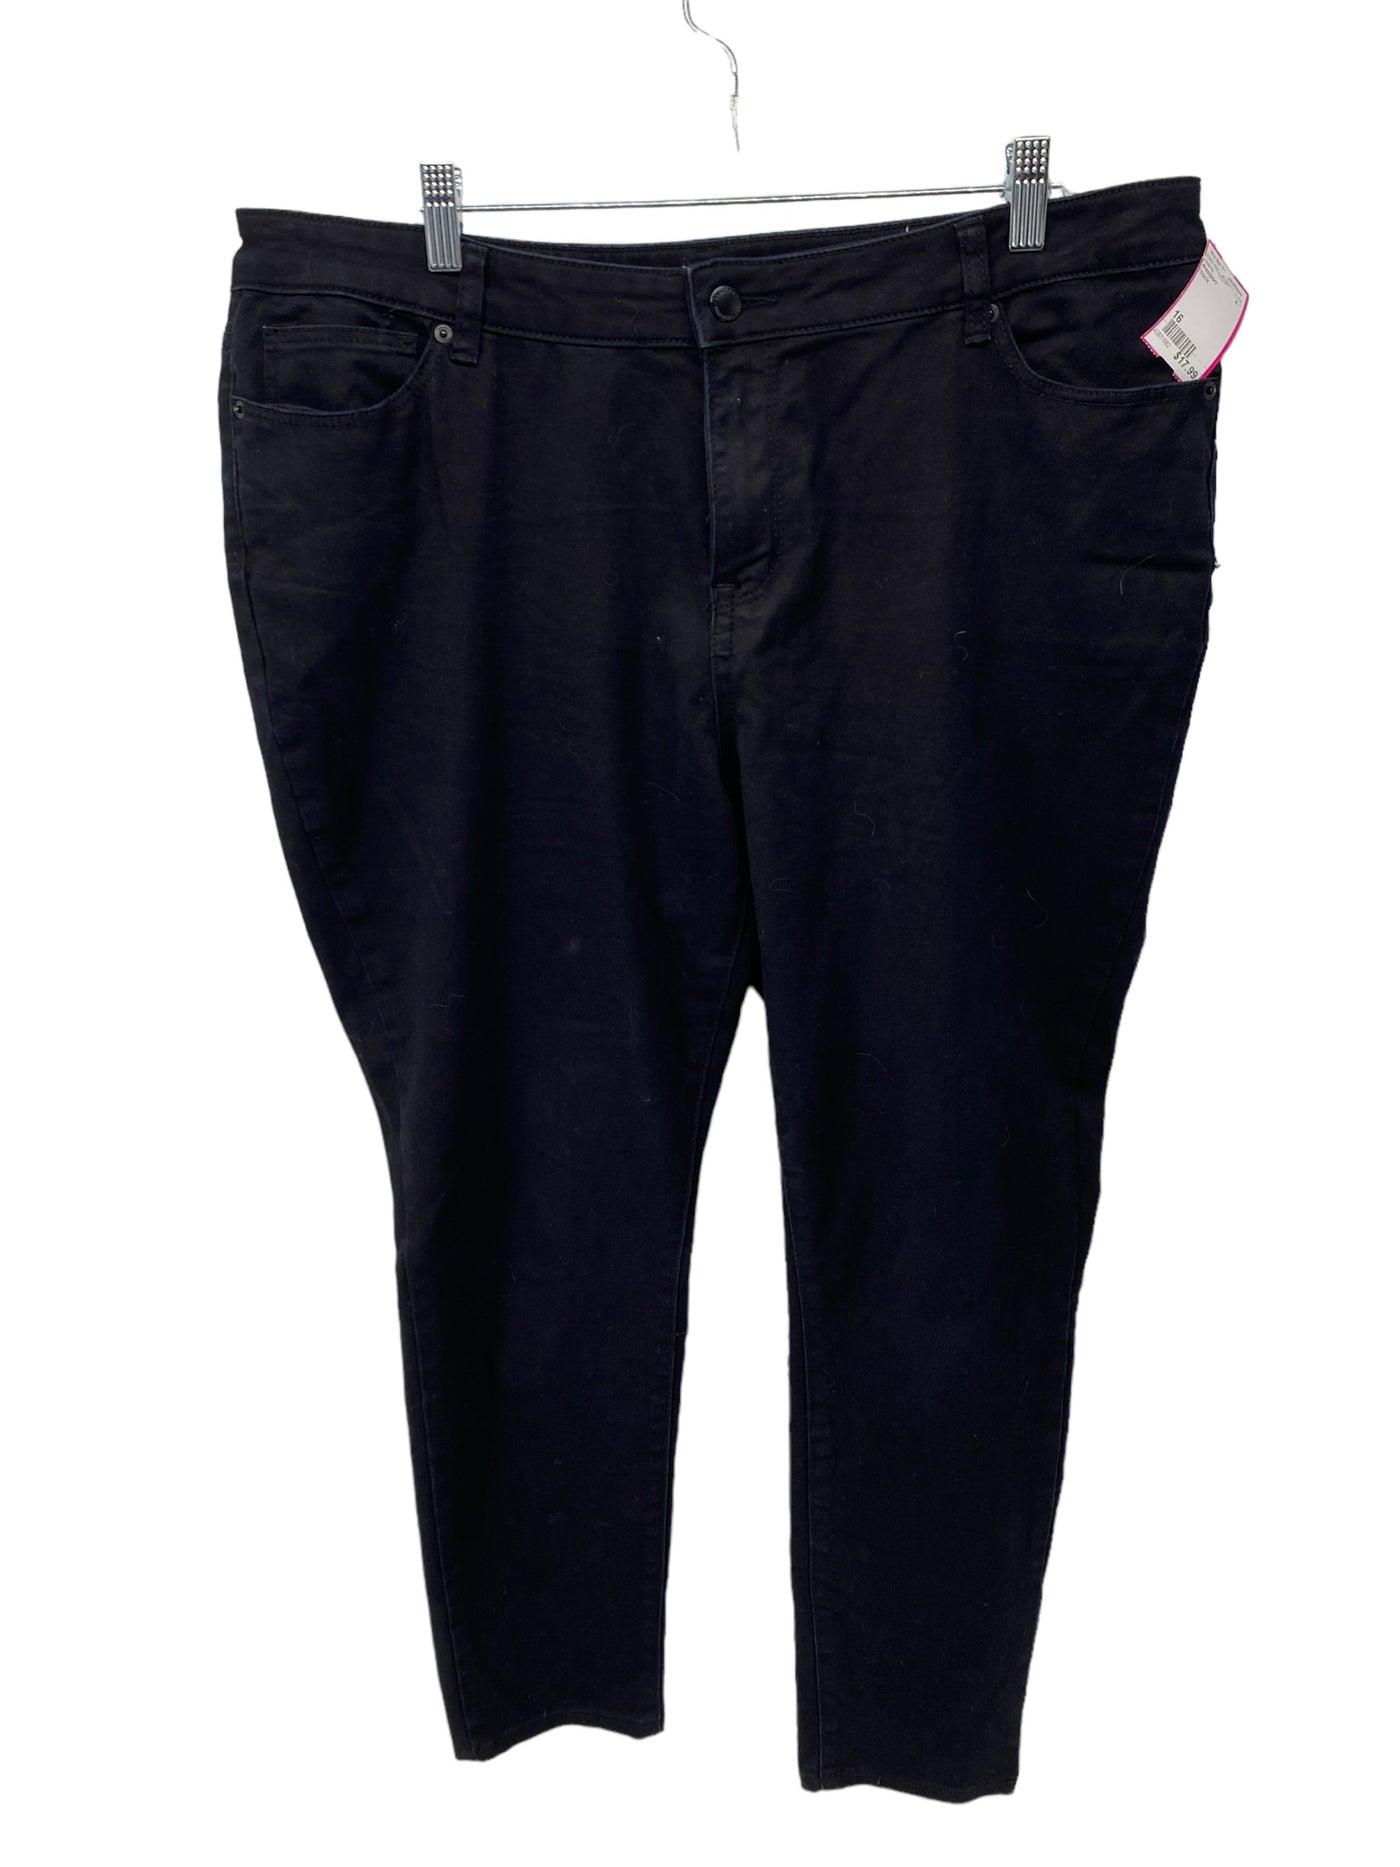 Westport Misses Size 16 Black Jeans